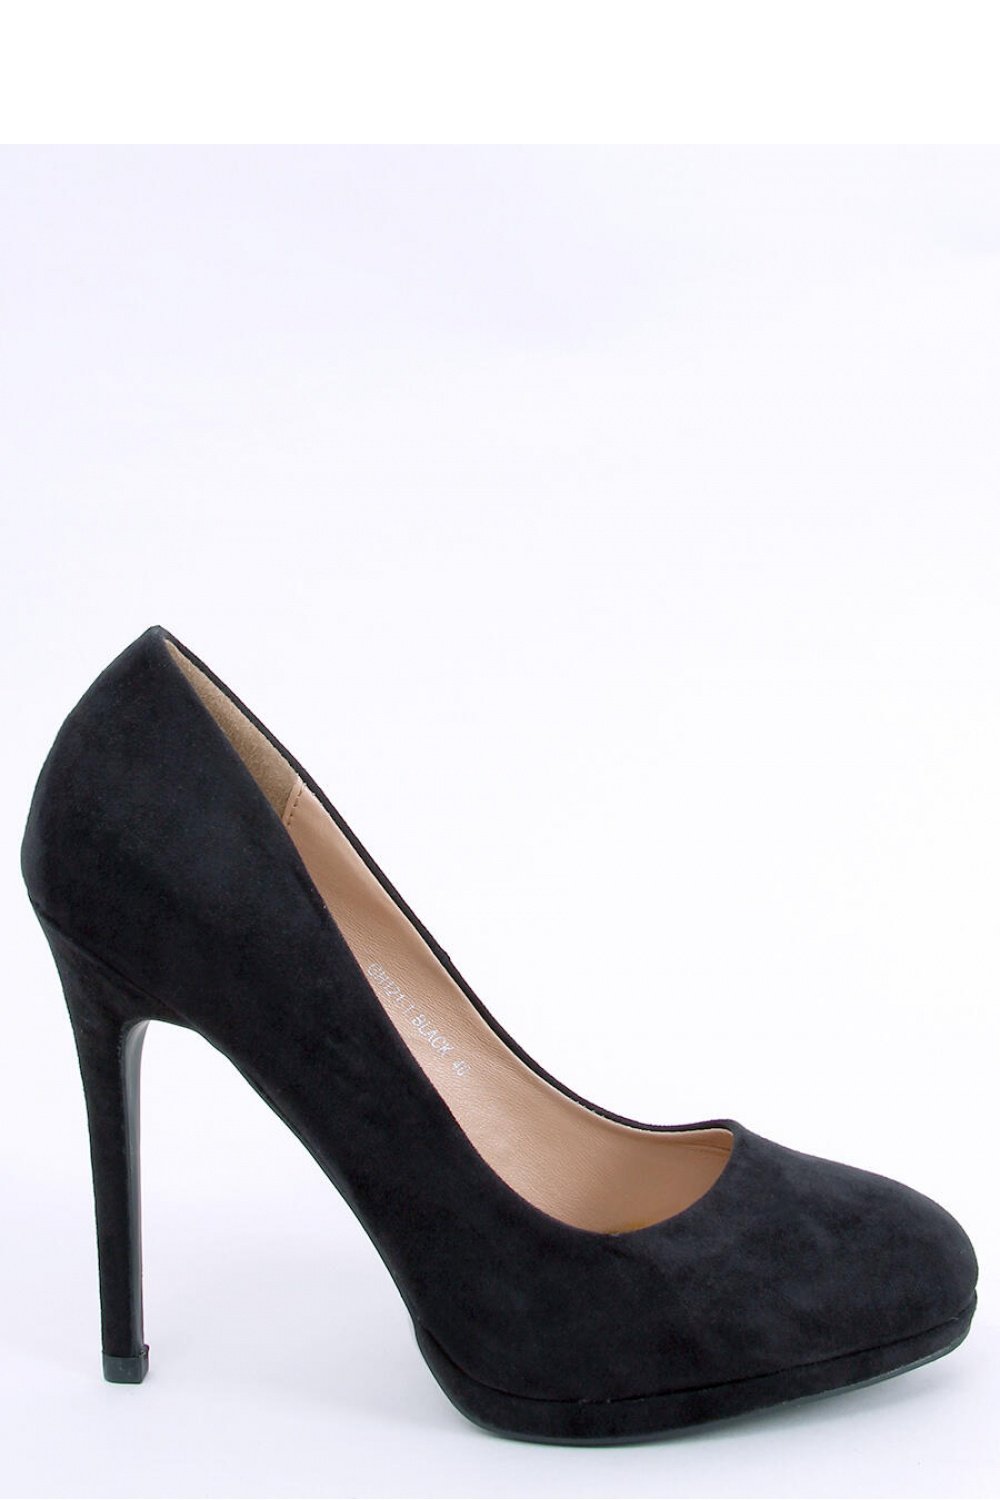 High heels model 174098 Inello Posh Styles Apparel